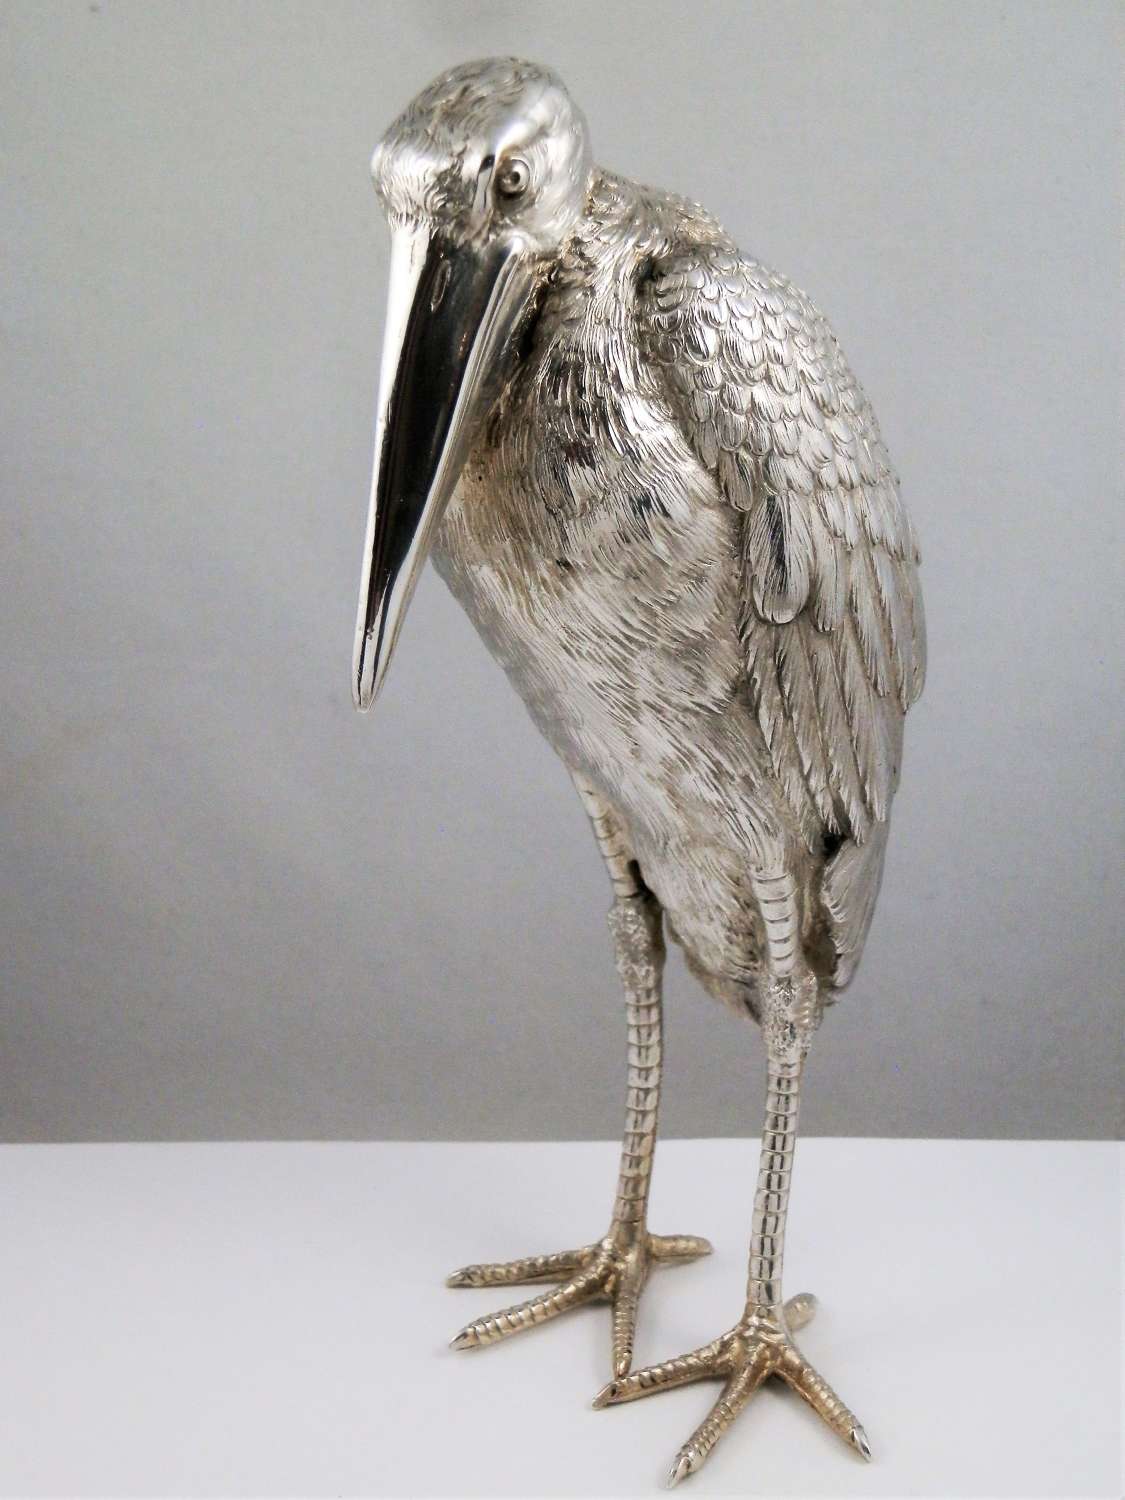 Nereshiemer silver imported Maribau stork. London 1913